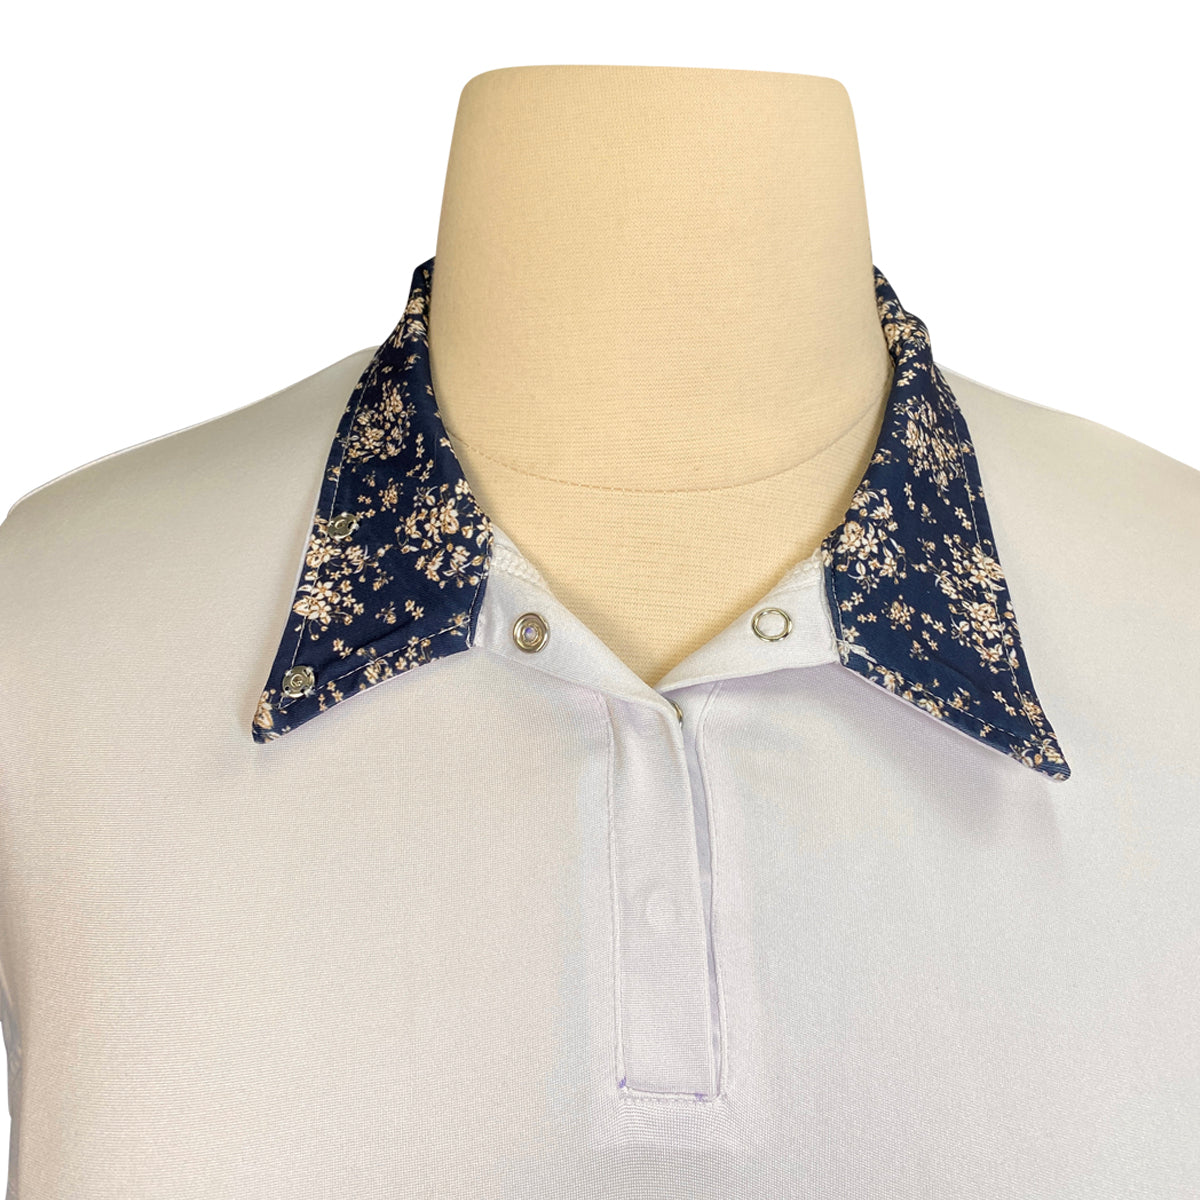 Dublin Short Sleeve Show Shirt in White/Blue Florals